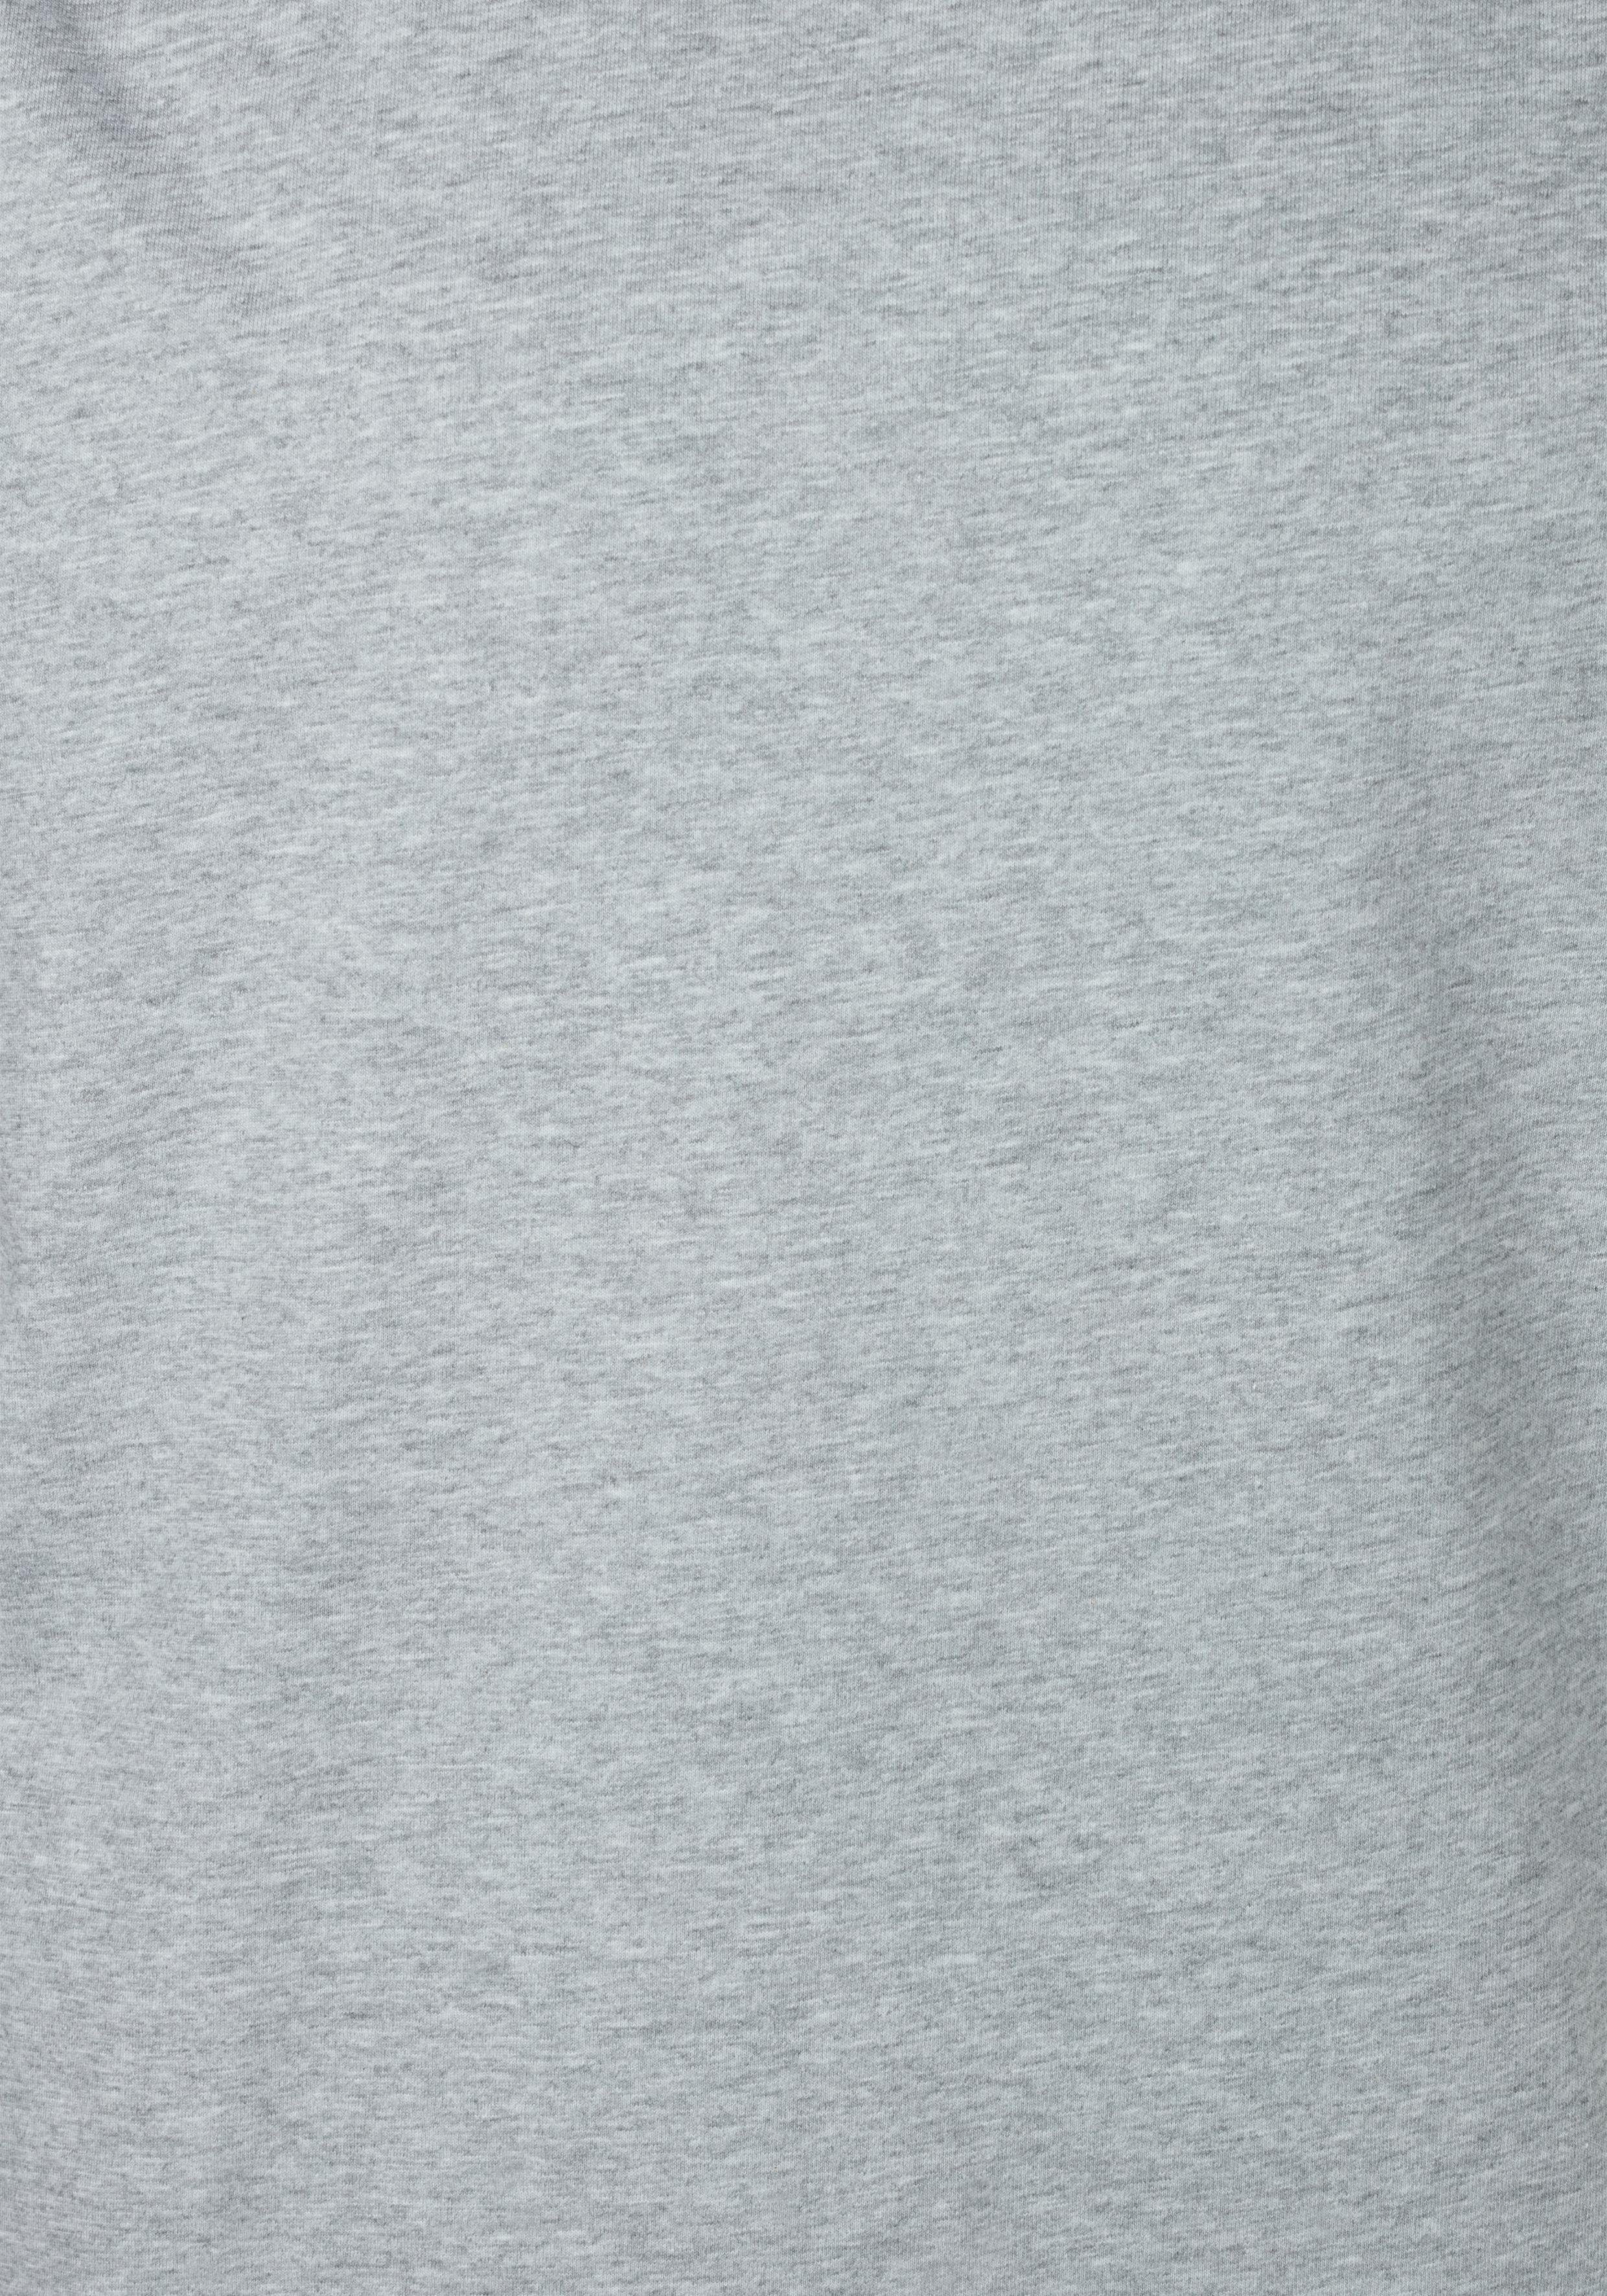 T-Shirt Loungewear in Basic Bench. navy grau-meliert, (2er-Pack) uni